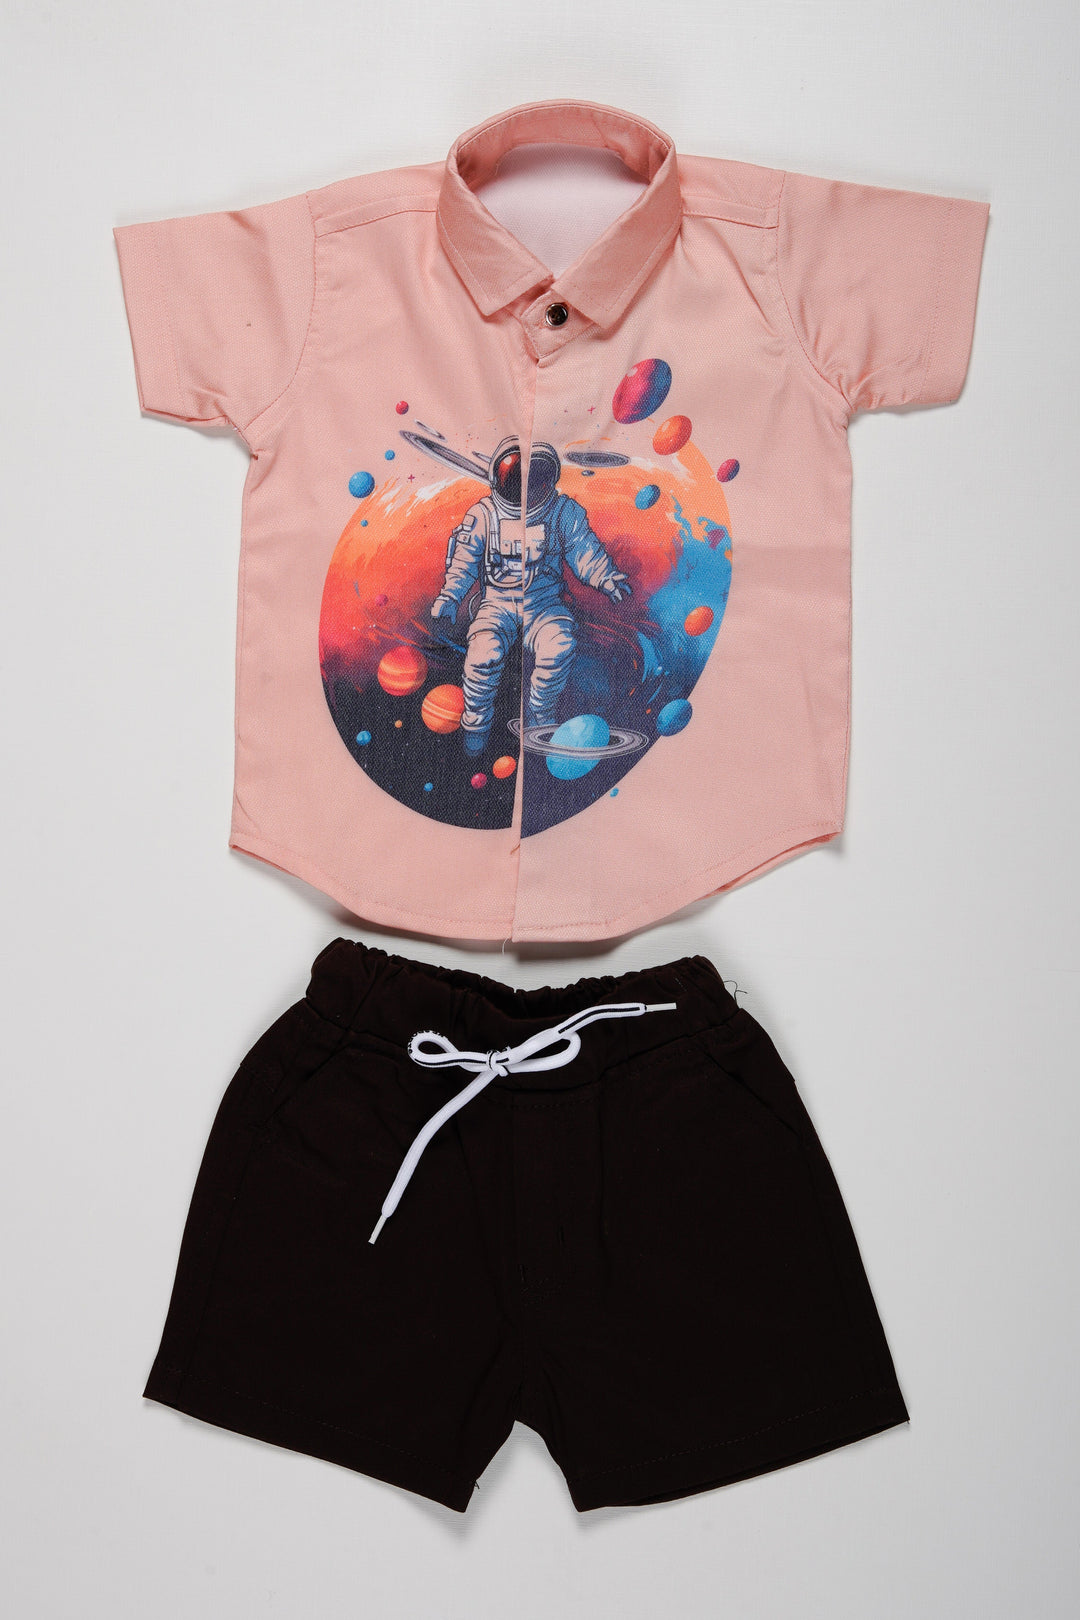 The Nesavu Boys Casual Set Boys Space Adventure Shirt and Shorts Set | Galactic Summer Outfit Nesavu 16 (1Y) / Salmon / Poly Cotton BCS035A-16 Boys Astronaut Printed Shirt and Shorts Set | Casual Galactic Gear for Kids | The Nesavu